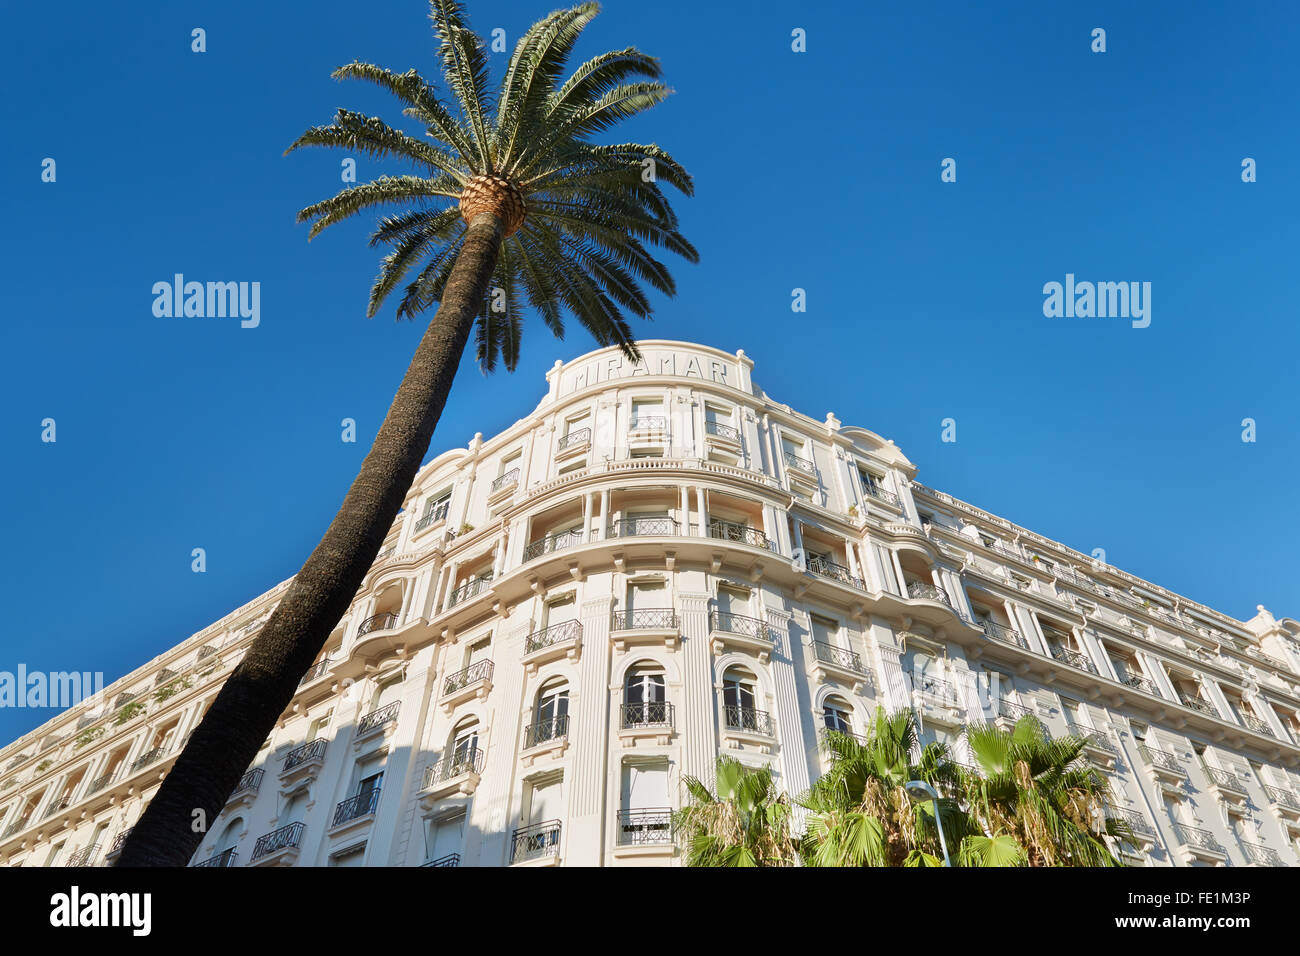 Hotel de lujo "Le Palais Miramar', ubicado en la famosa Croisette boulevard en Cannes Foto de stock